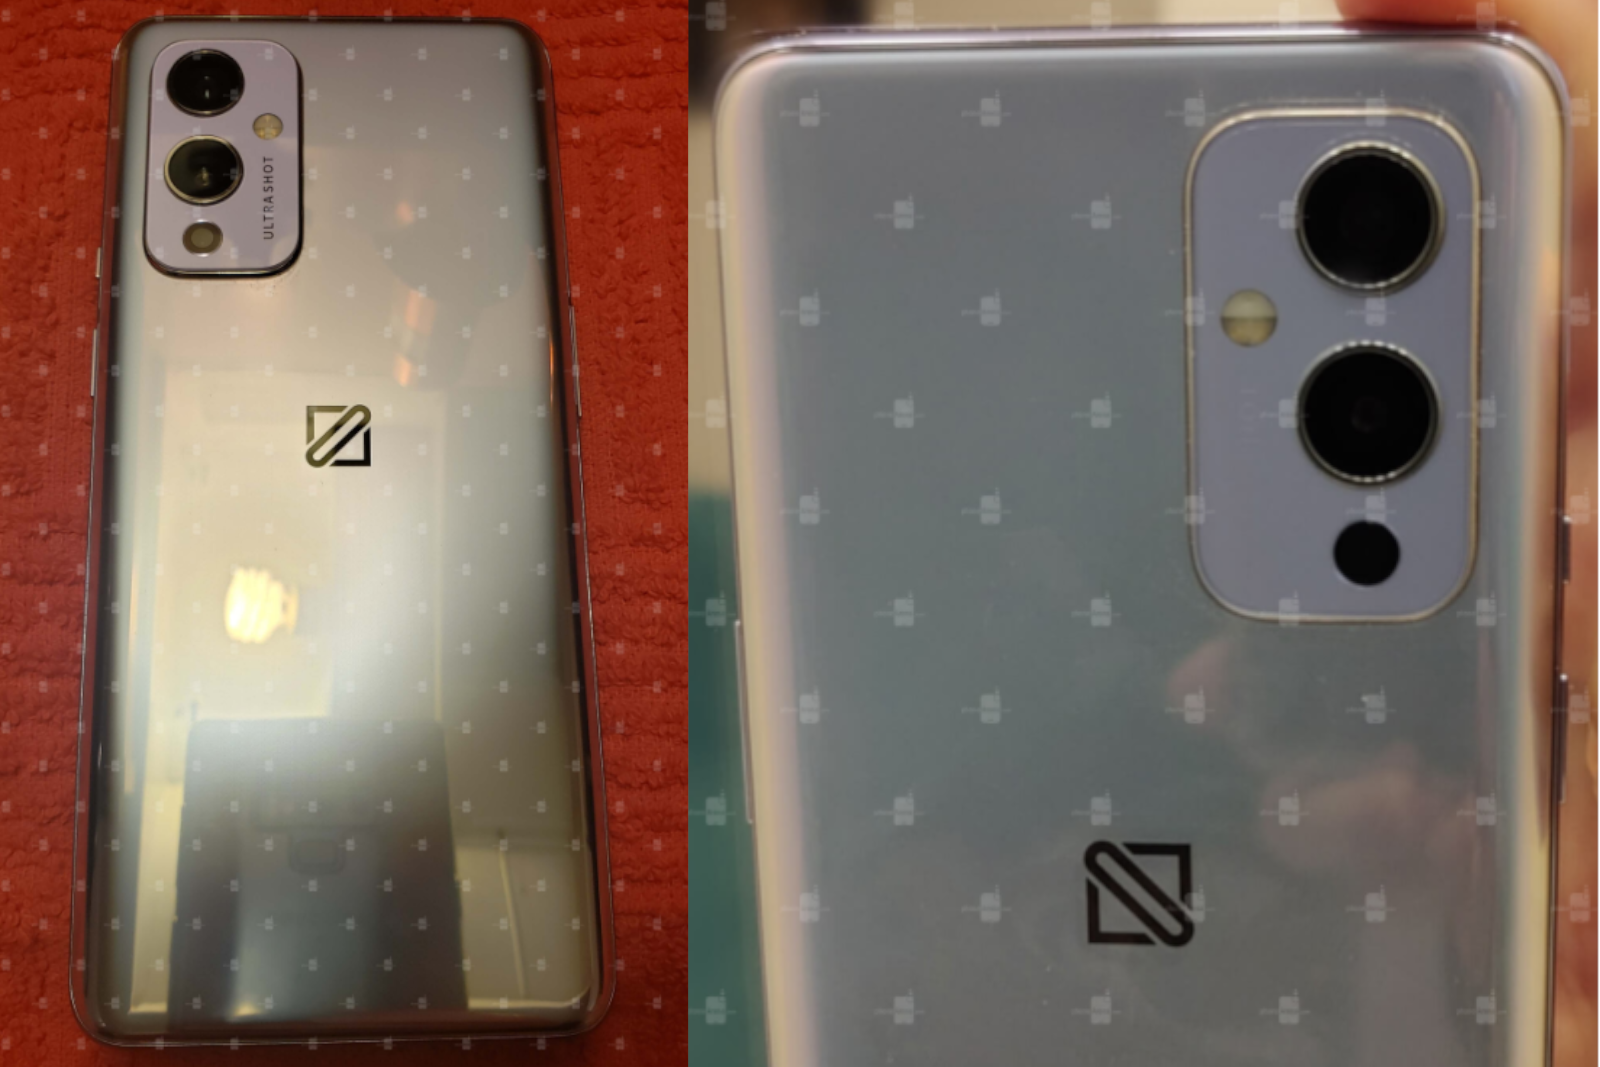 OnePlus 9 5G leaks, showcasing new phone's design photo 1